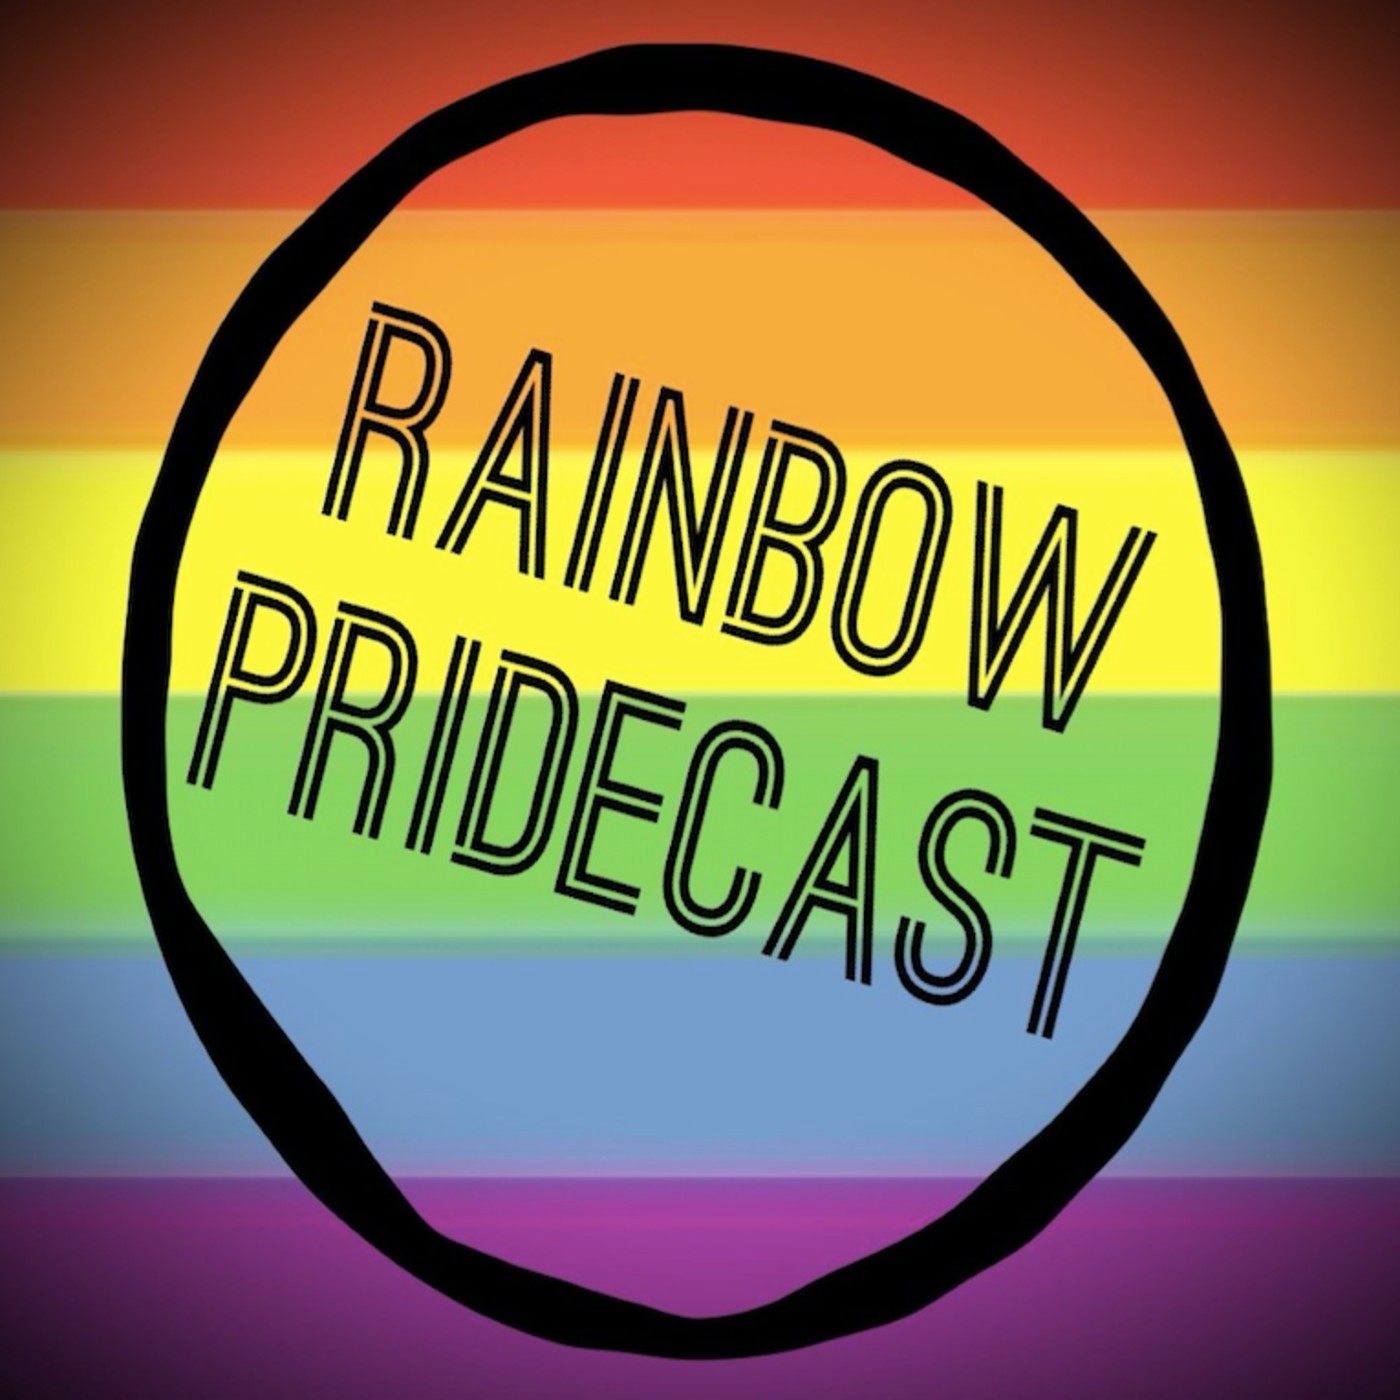 Rainbow Pridecast